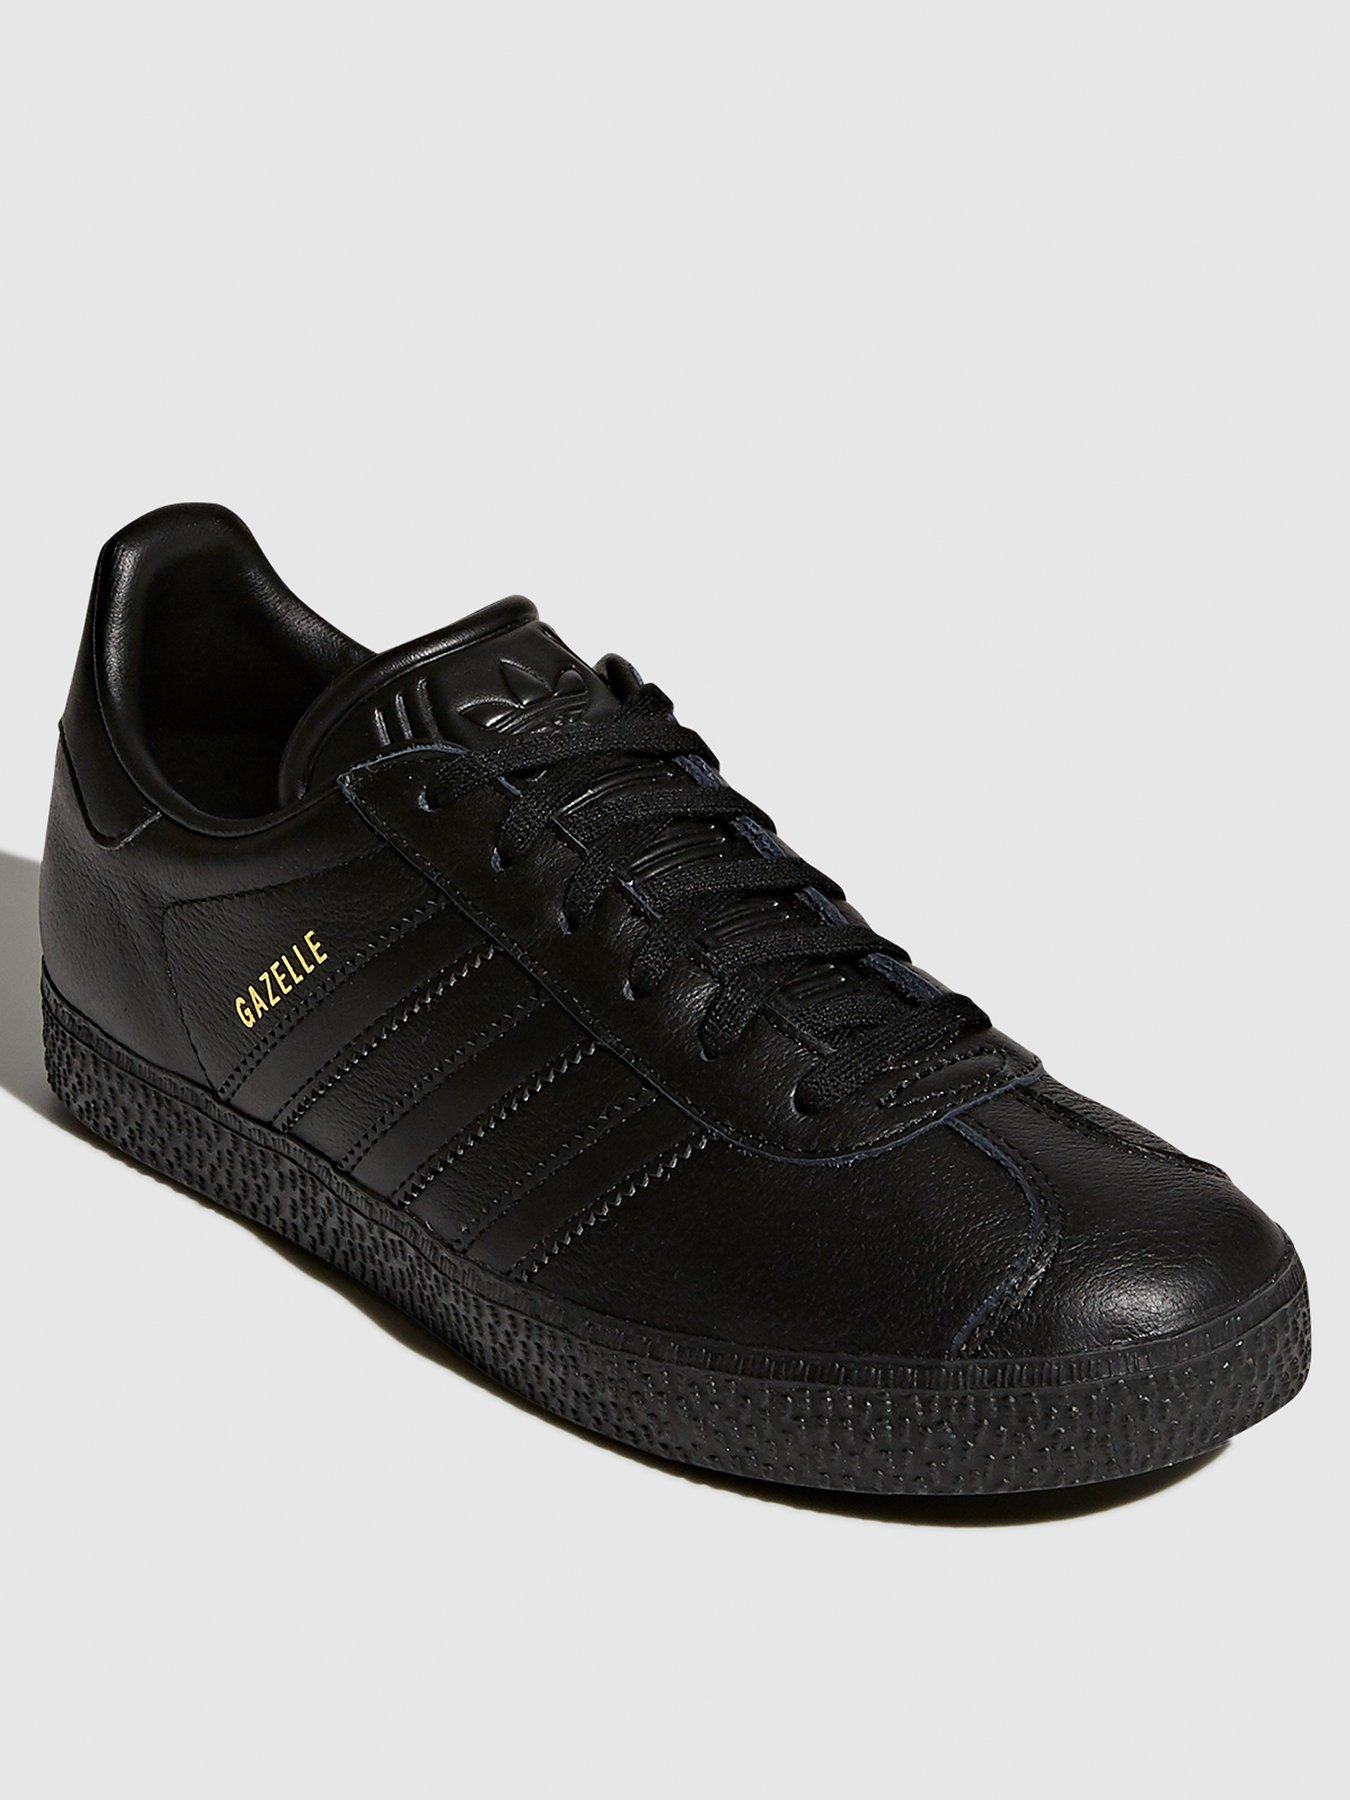 black leather adidas gazelle junior